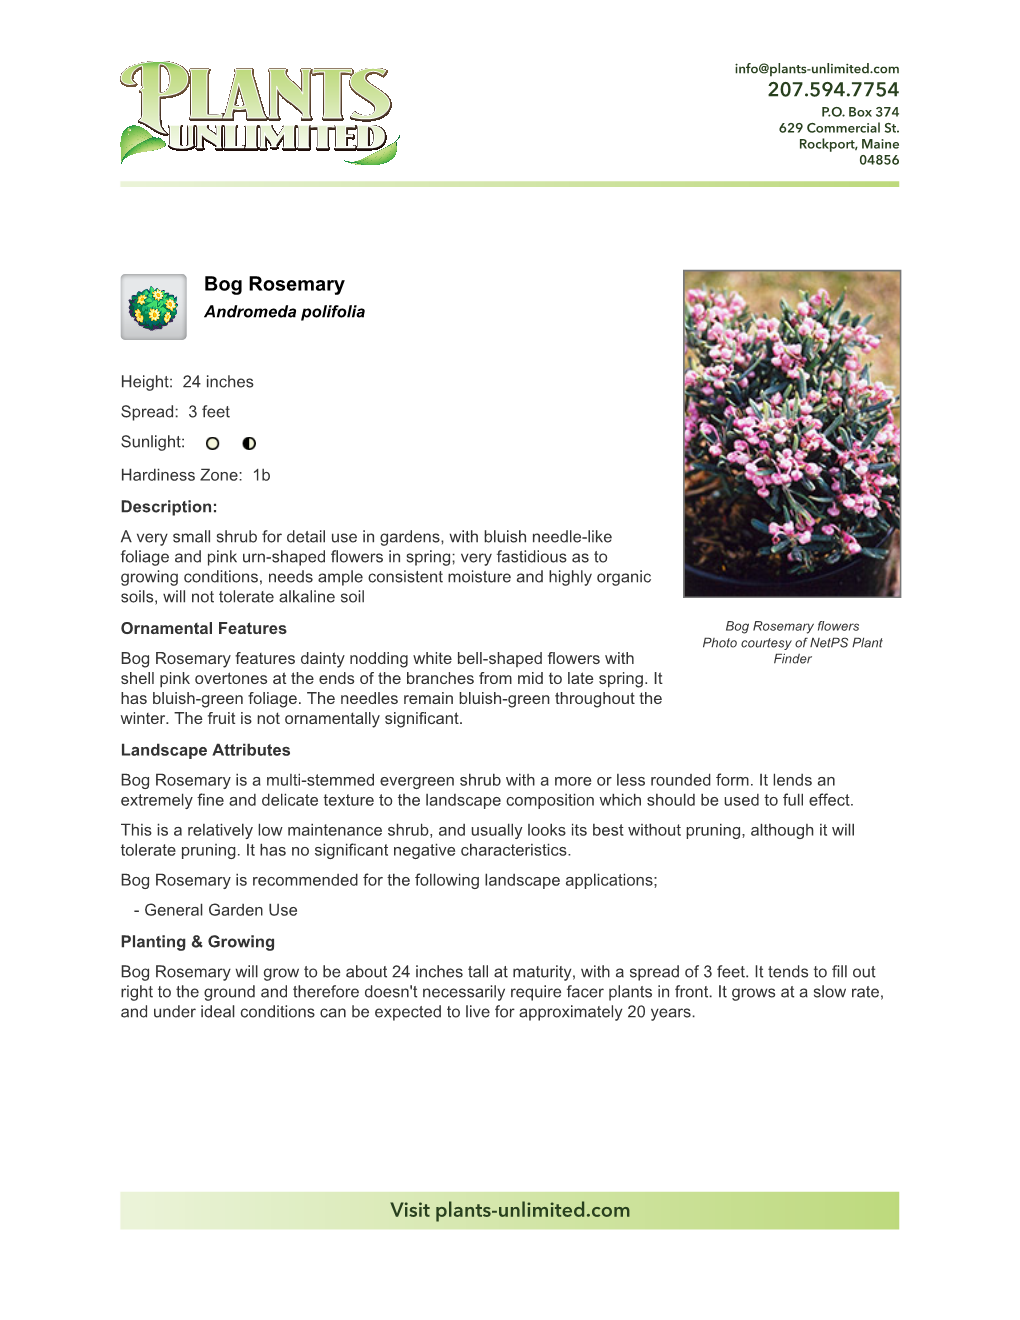 Plants Unlimited Bog Rosemary